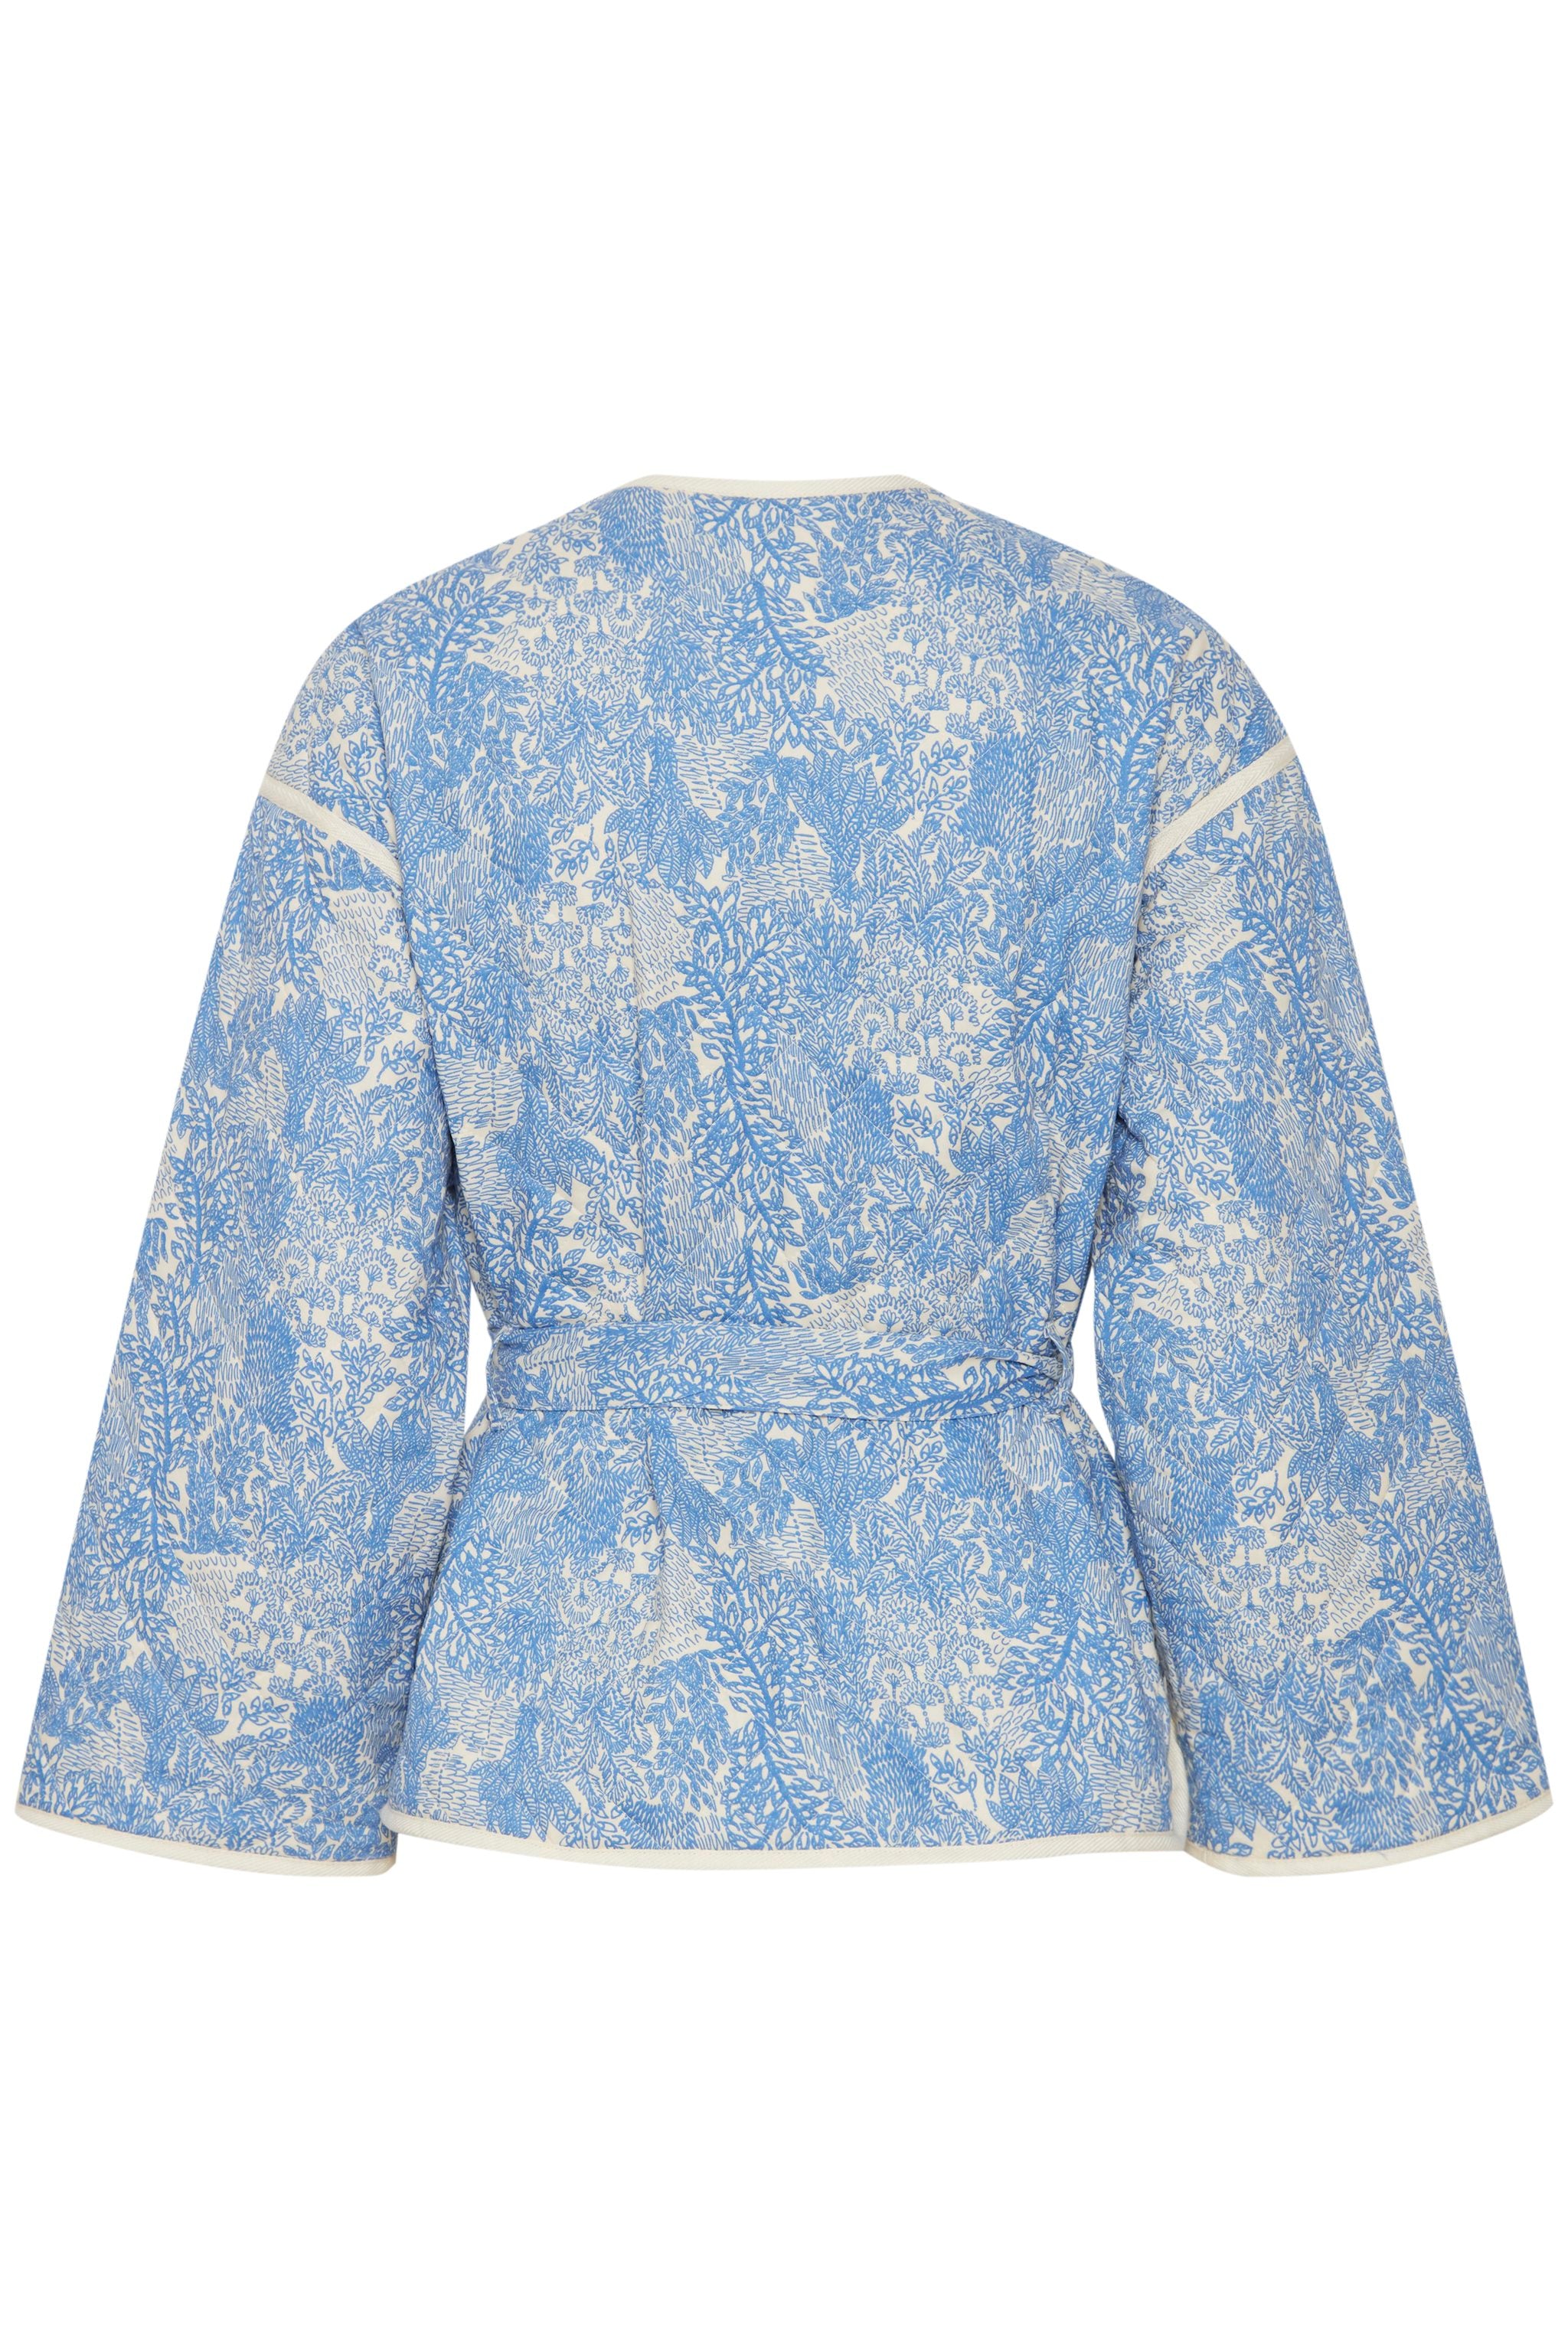 ATELIER RÊVE kimono Style Printed Casual Jacket - Doodle Flower Print